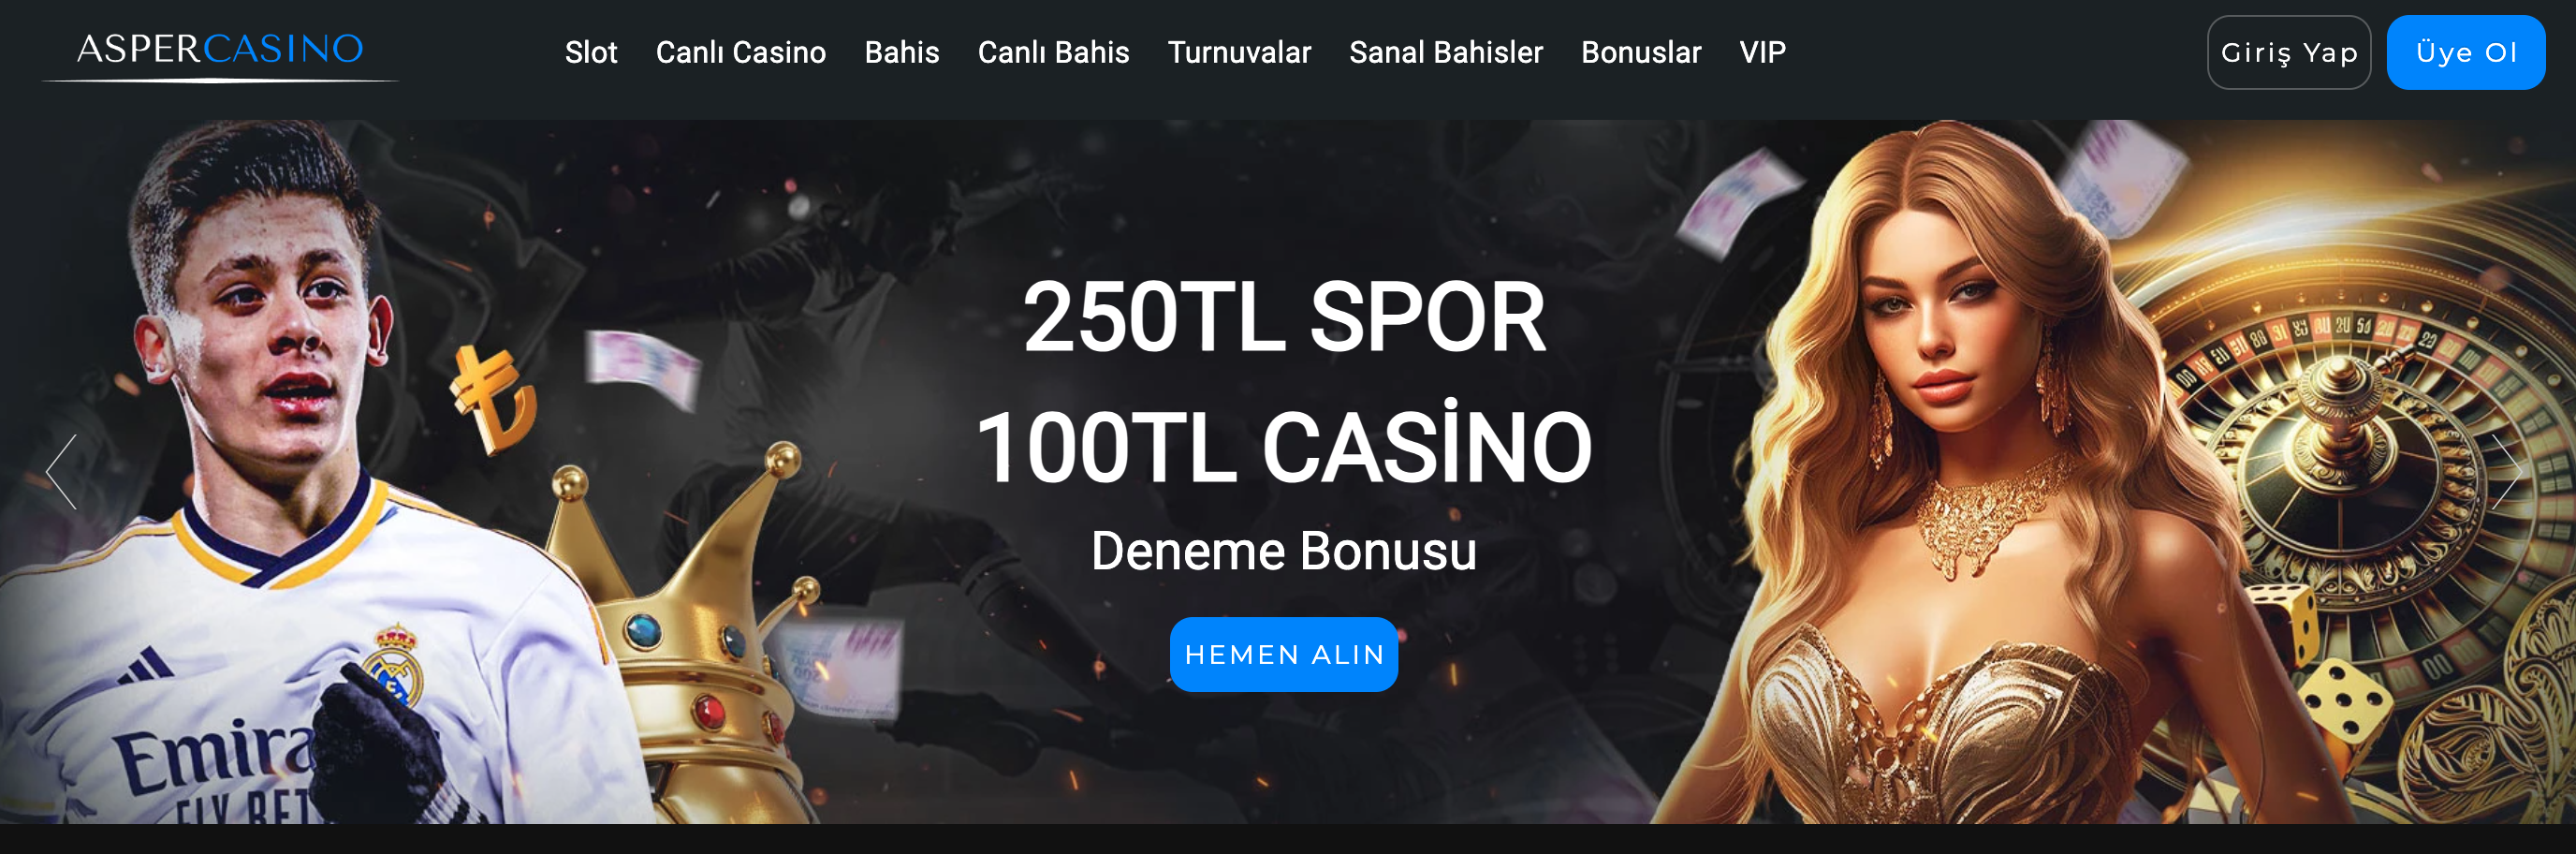 Asper Casino Deneme Bonusu